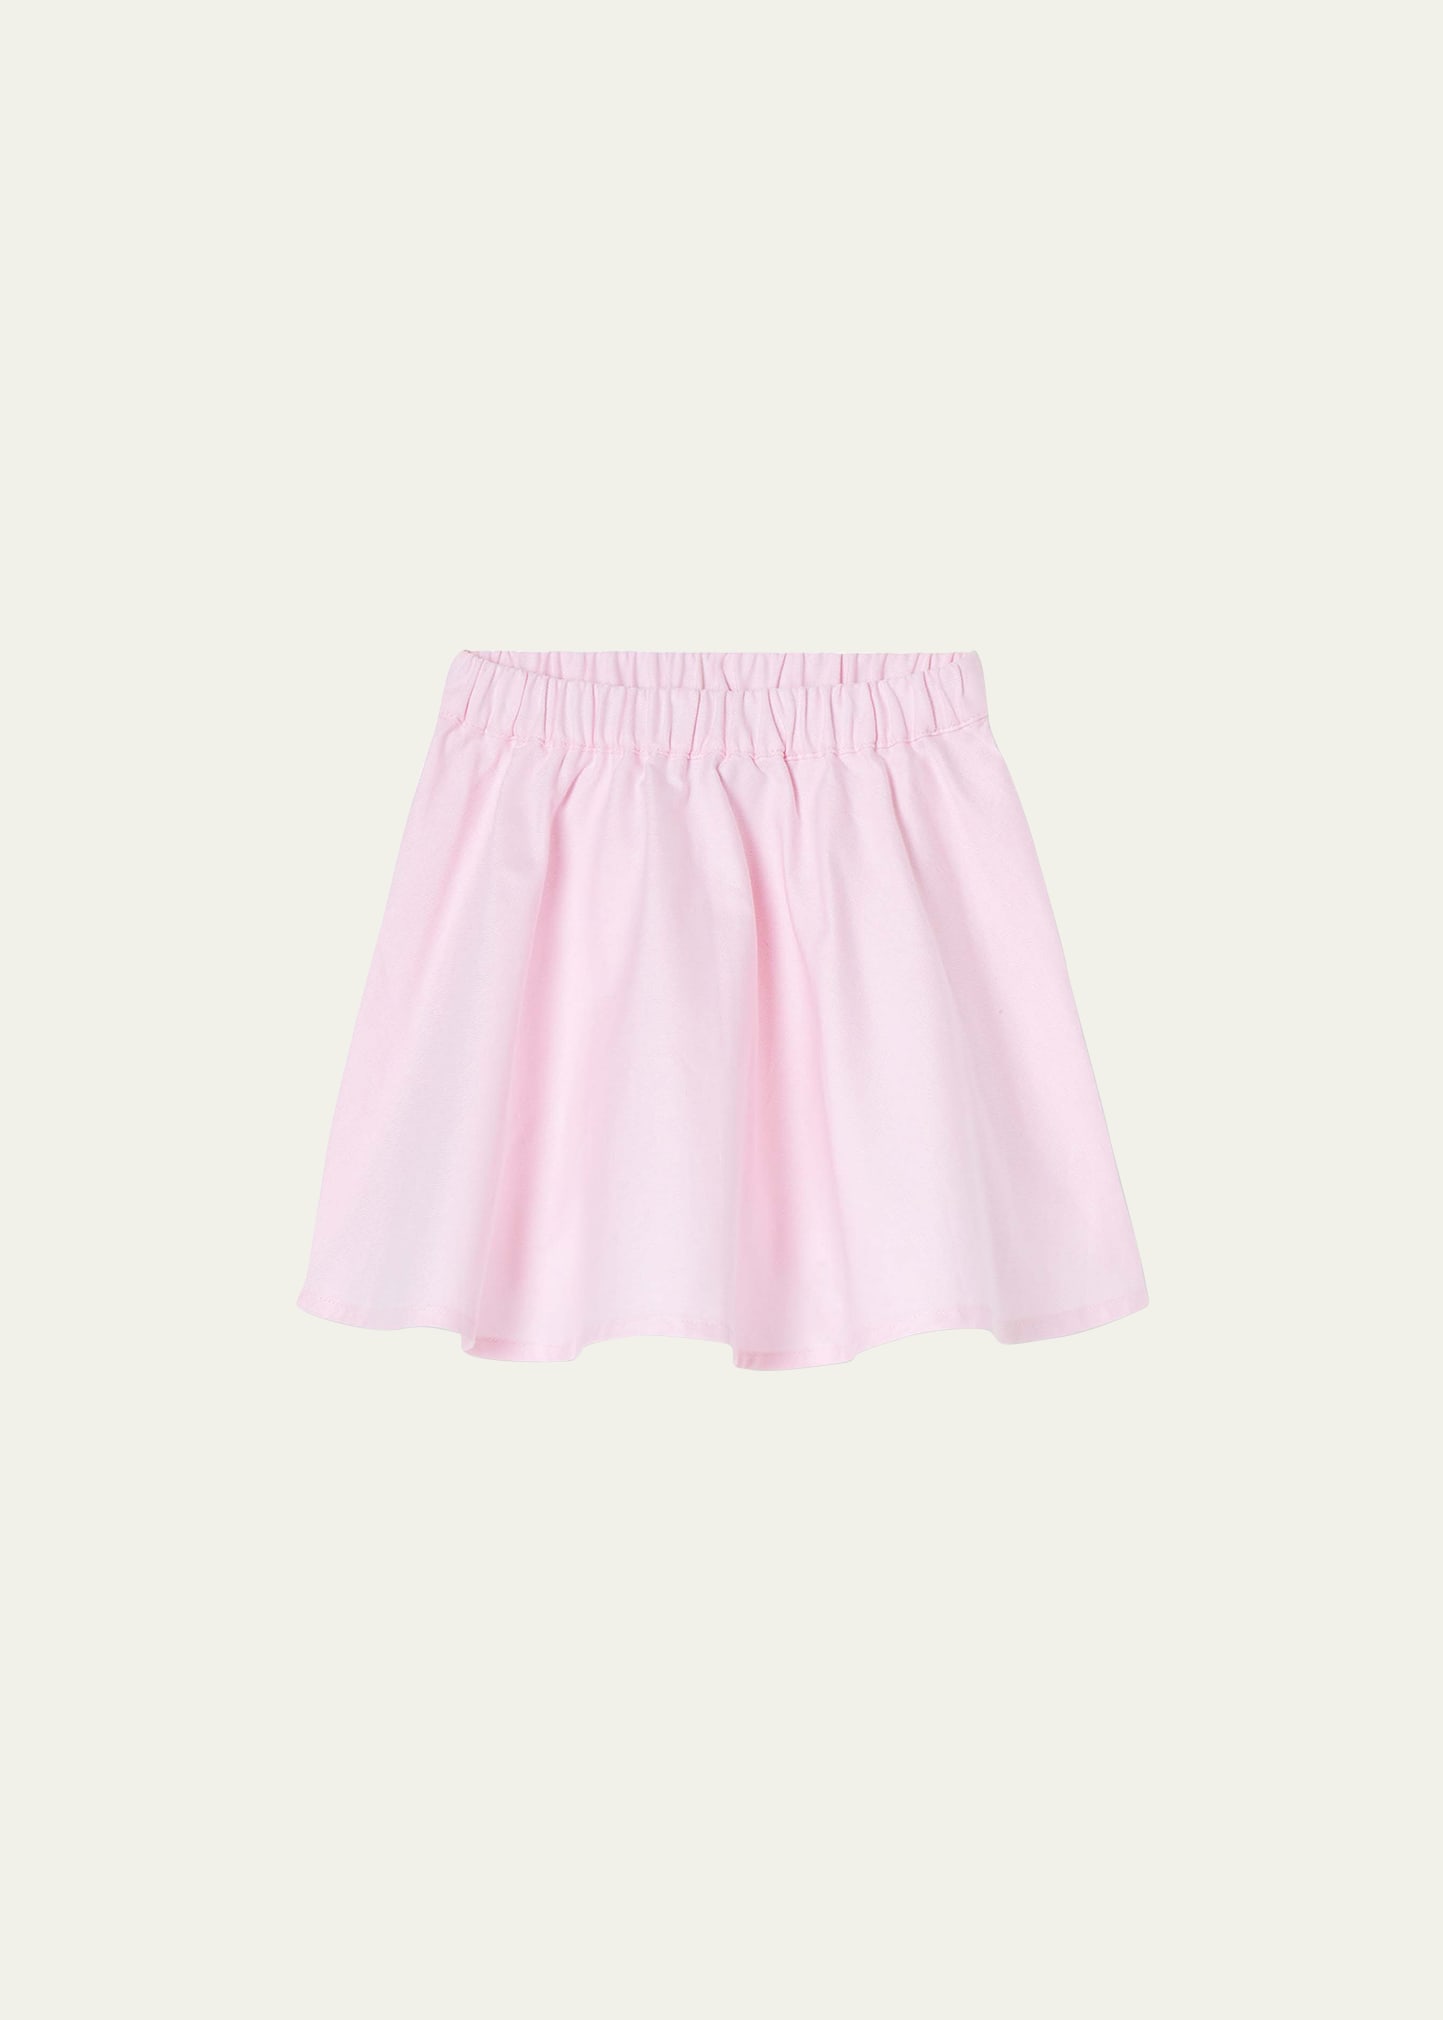 Classic Prep Childrenswear Girl's Sabrina Skirt - Solid Oxford, Size XS-XL